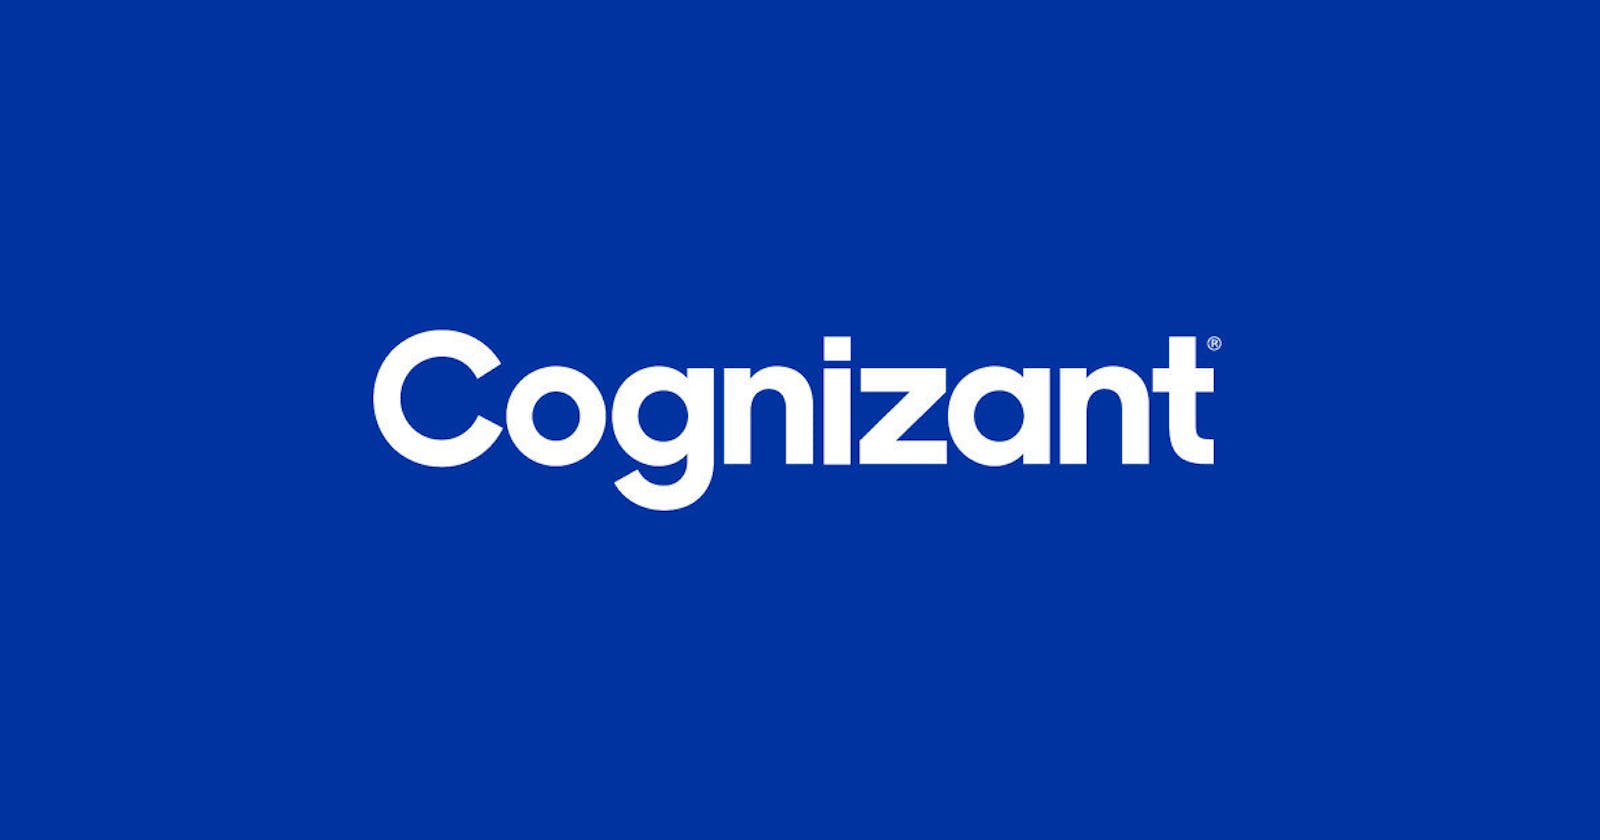 Cognizant Digital Nurture 2.0 Program, 2022 - Complete Guide & Experience